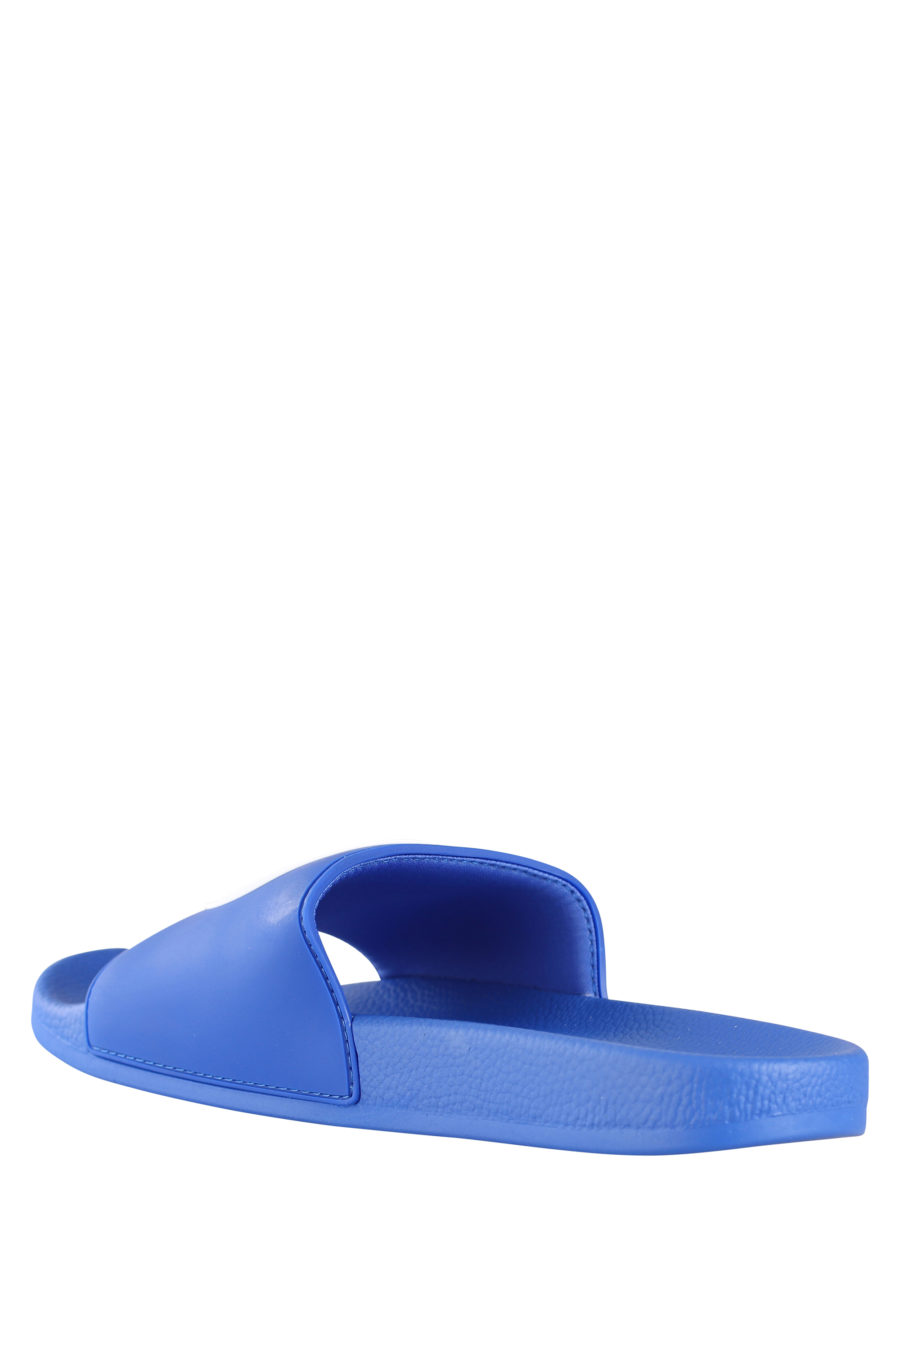 Blue flip flops with circle logo - IMG 9667